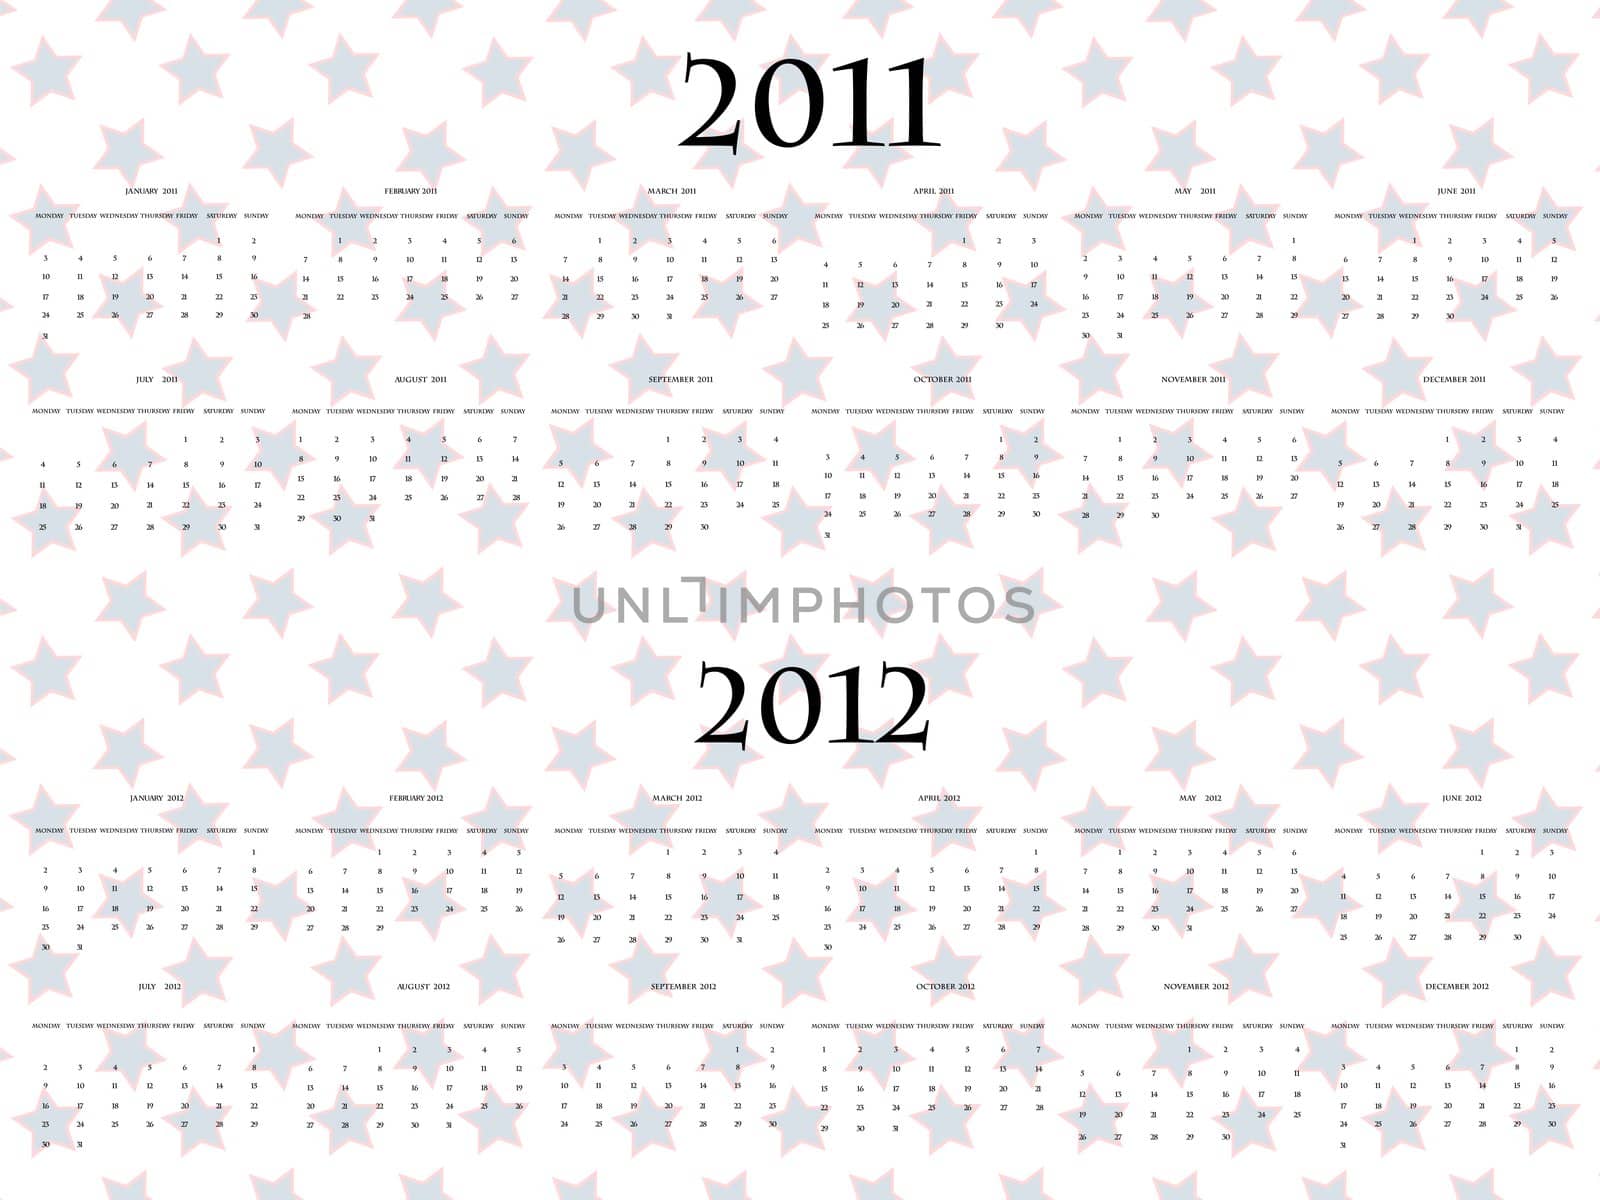 vector stars calendar for 2011 and 2012, abstract vector art illustration